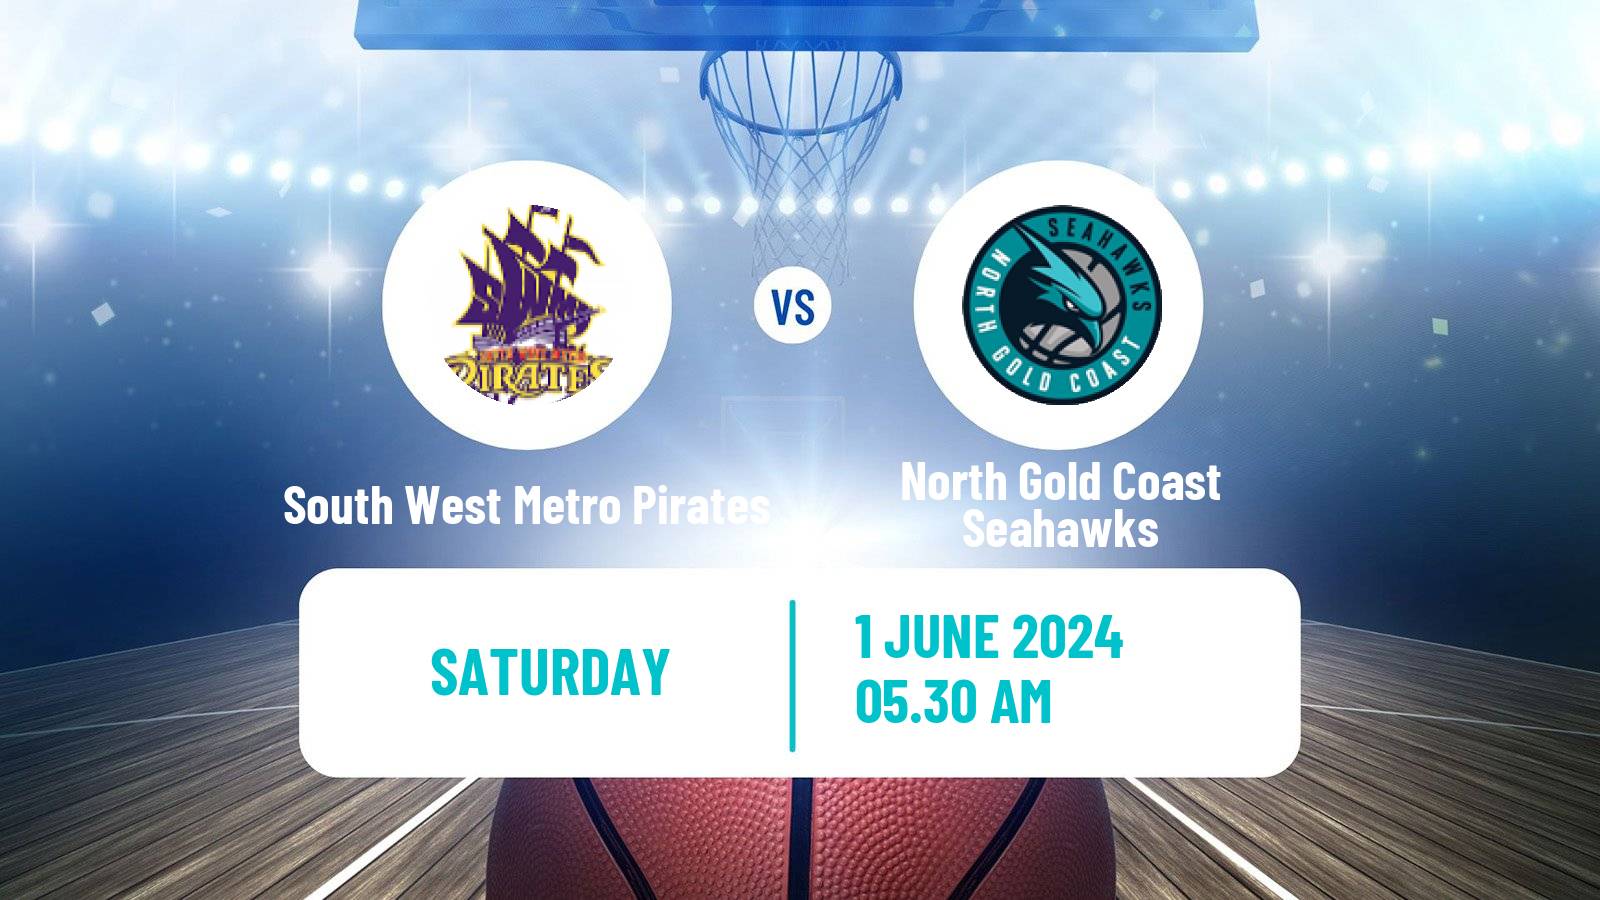 Basketball Australian NBL1 North South West Metro Pirates - North Gold Coast Seahawks